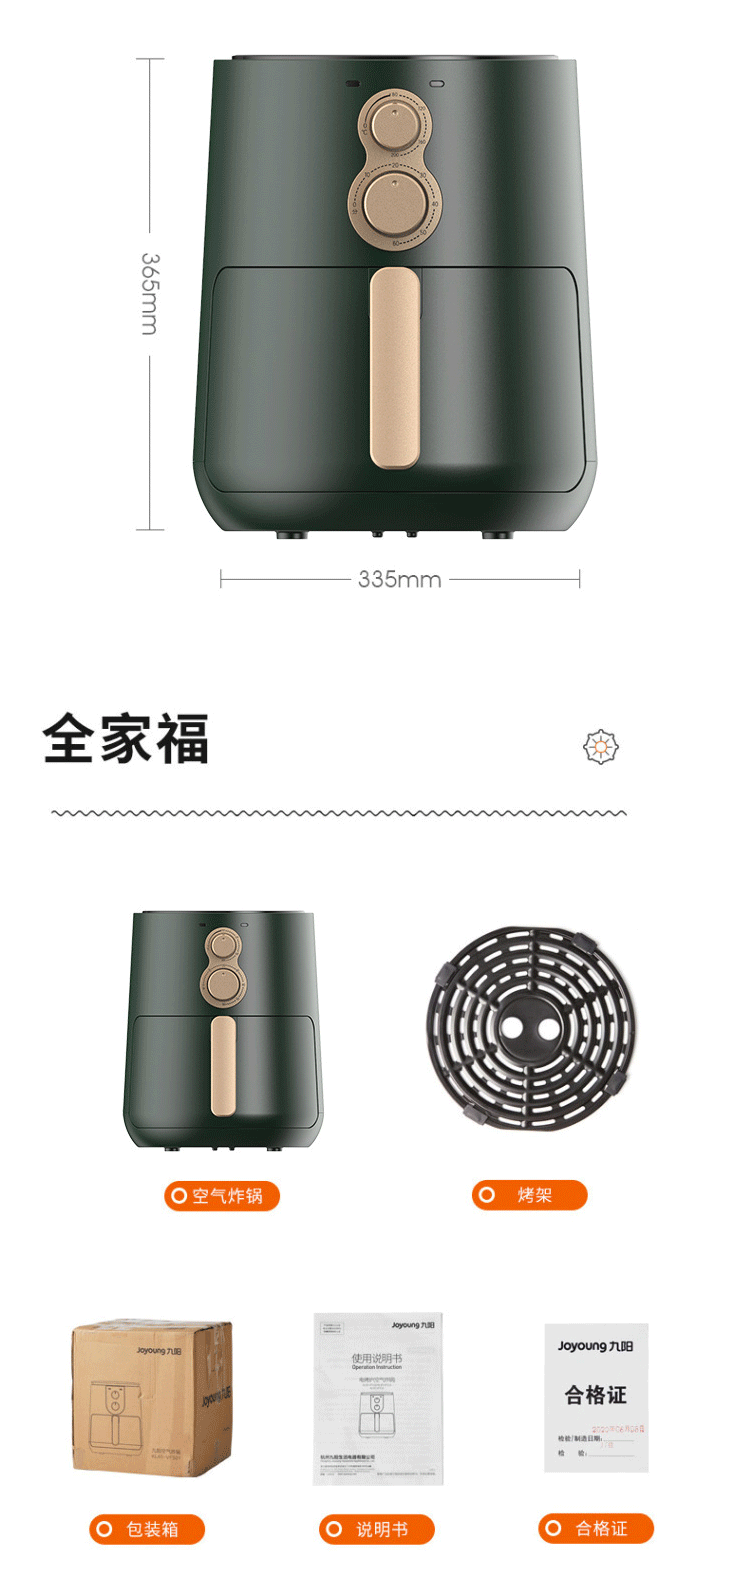 九阳/Joyoung  空气炸锅 KL45-VF711  4.5L